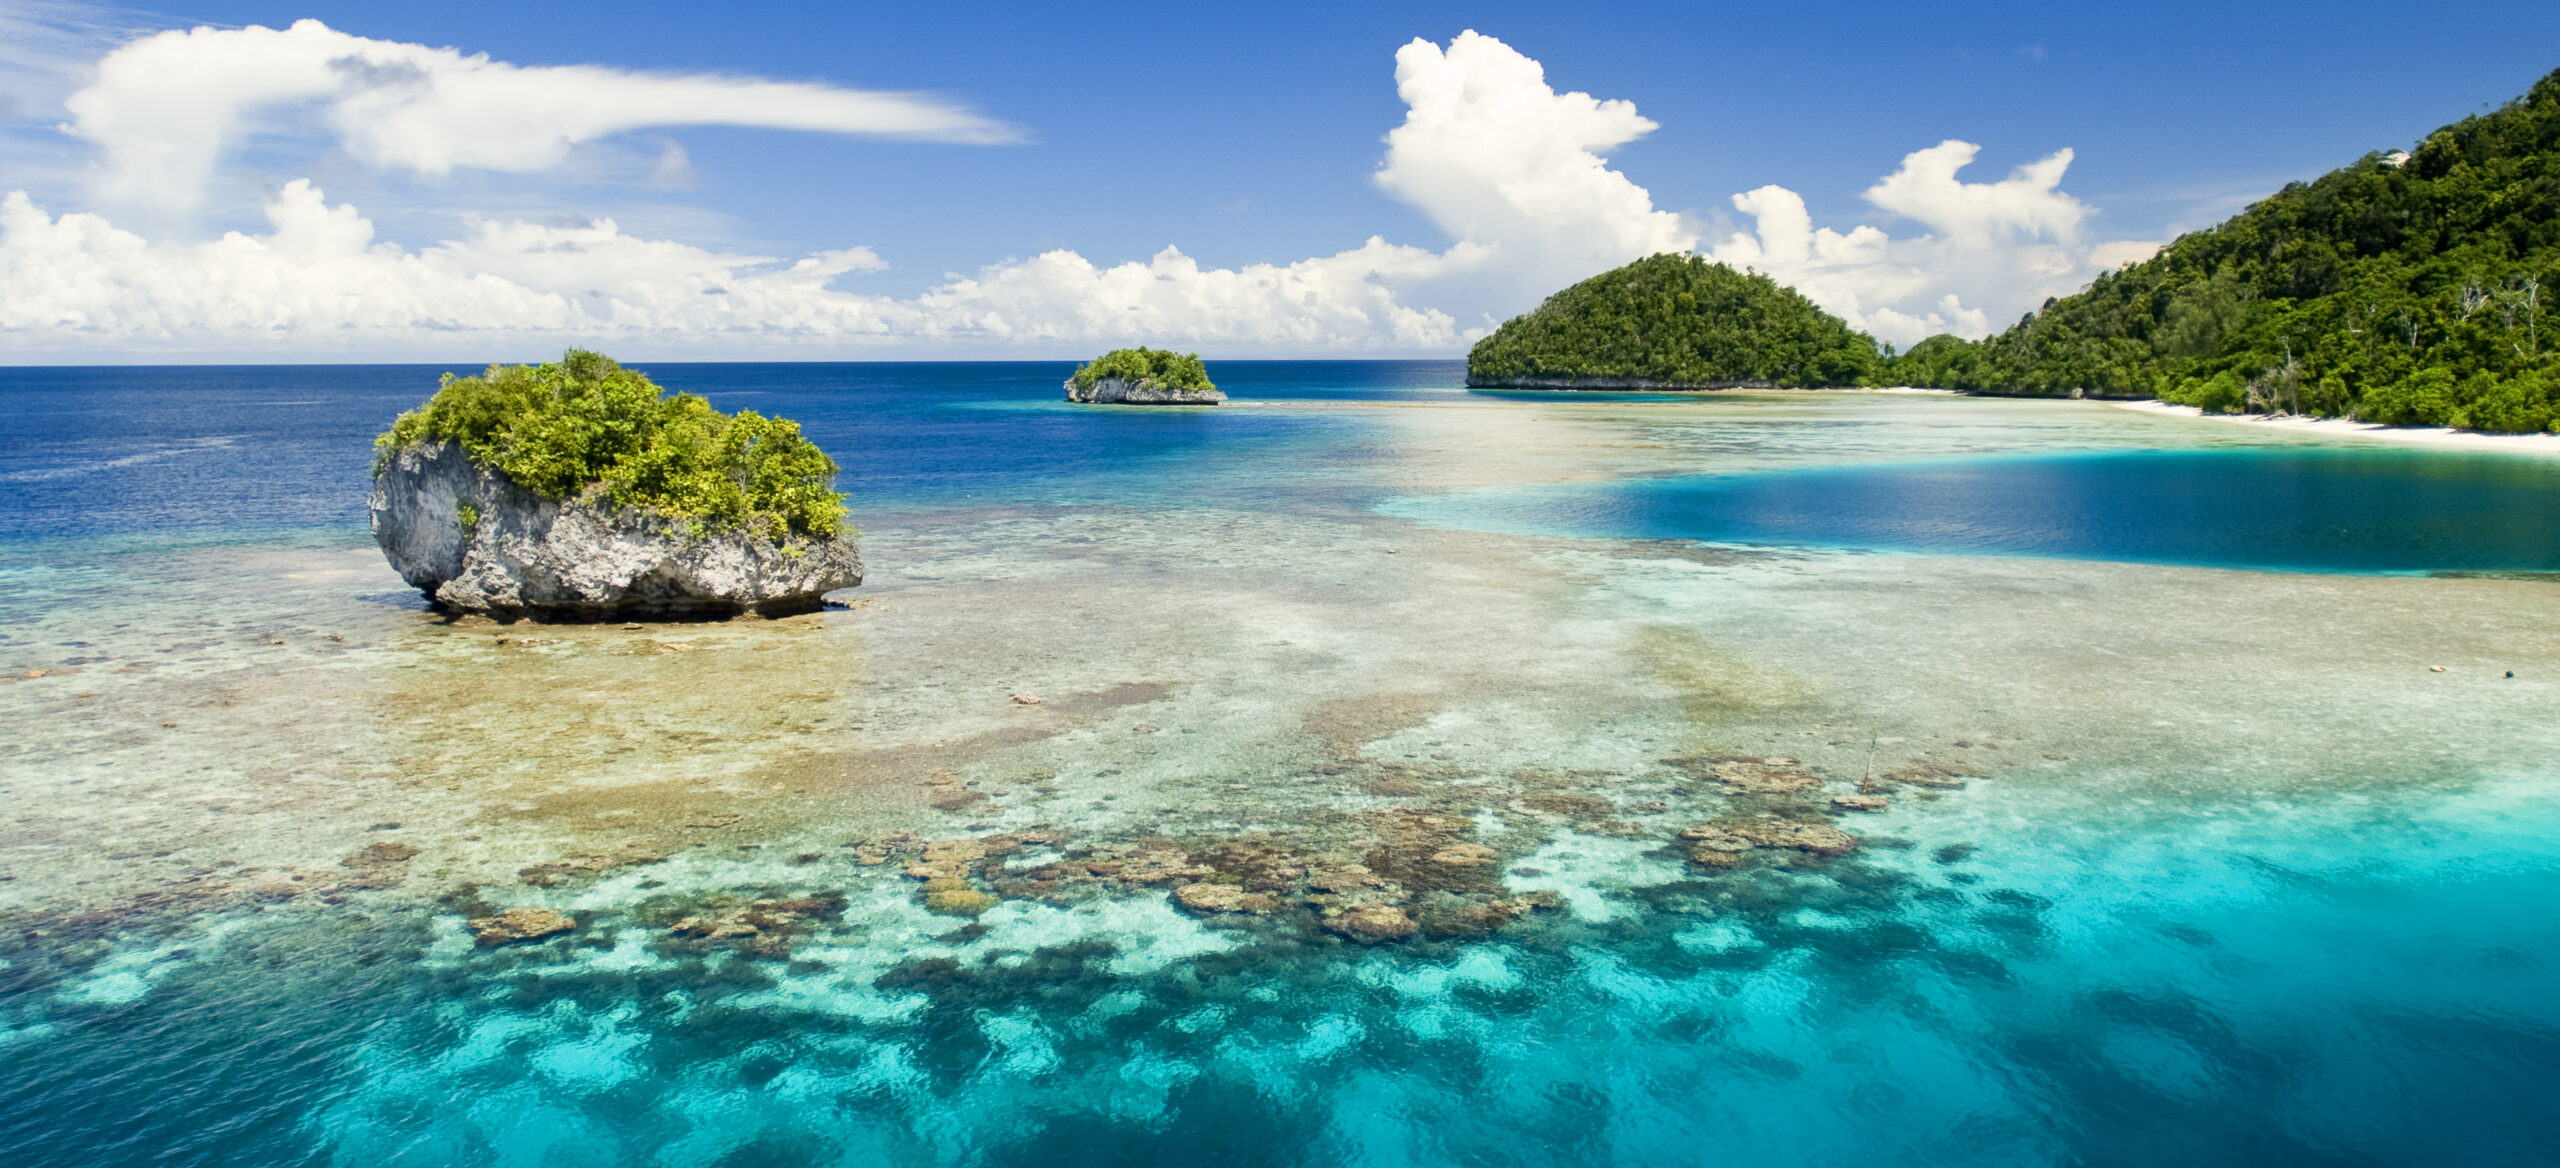 Beautiful landscape taken by Papua Diving team